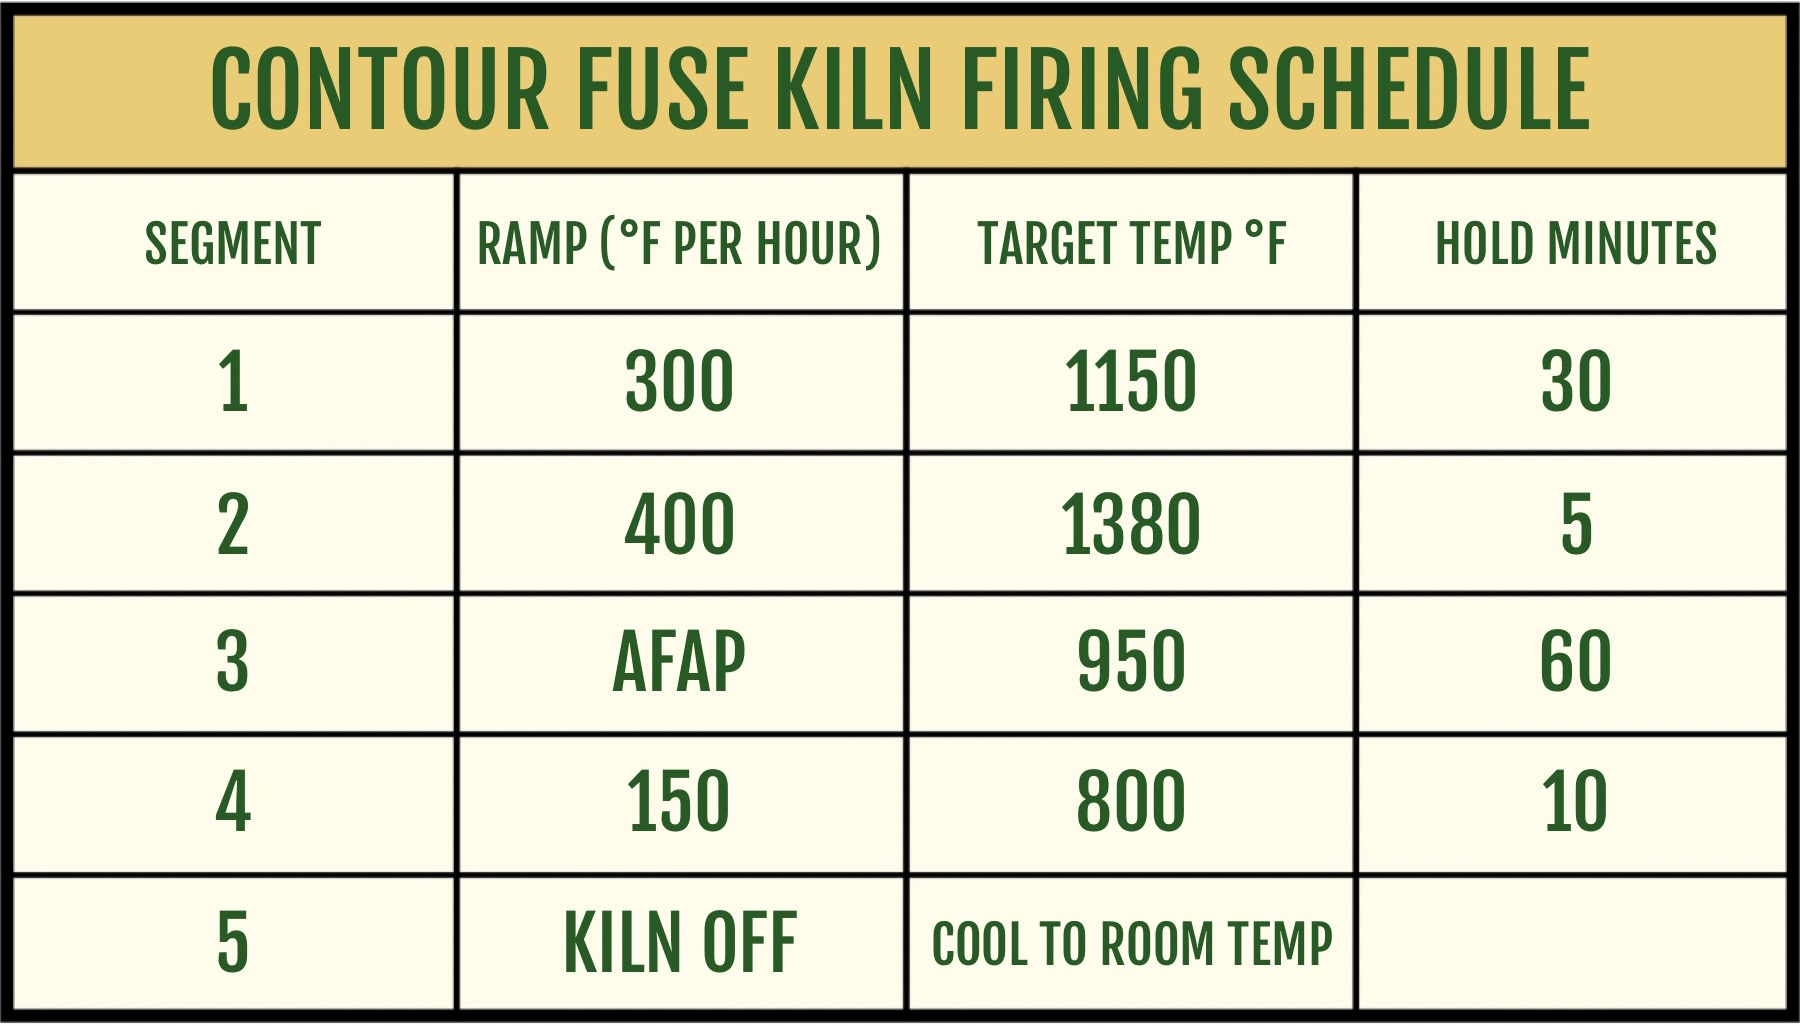 Contour Fuse firing schedule